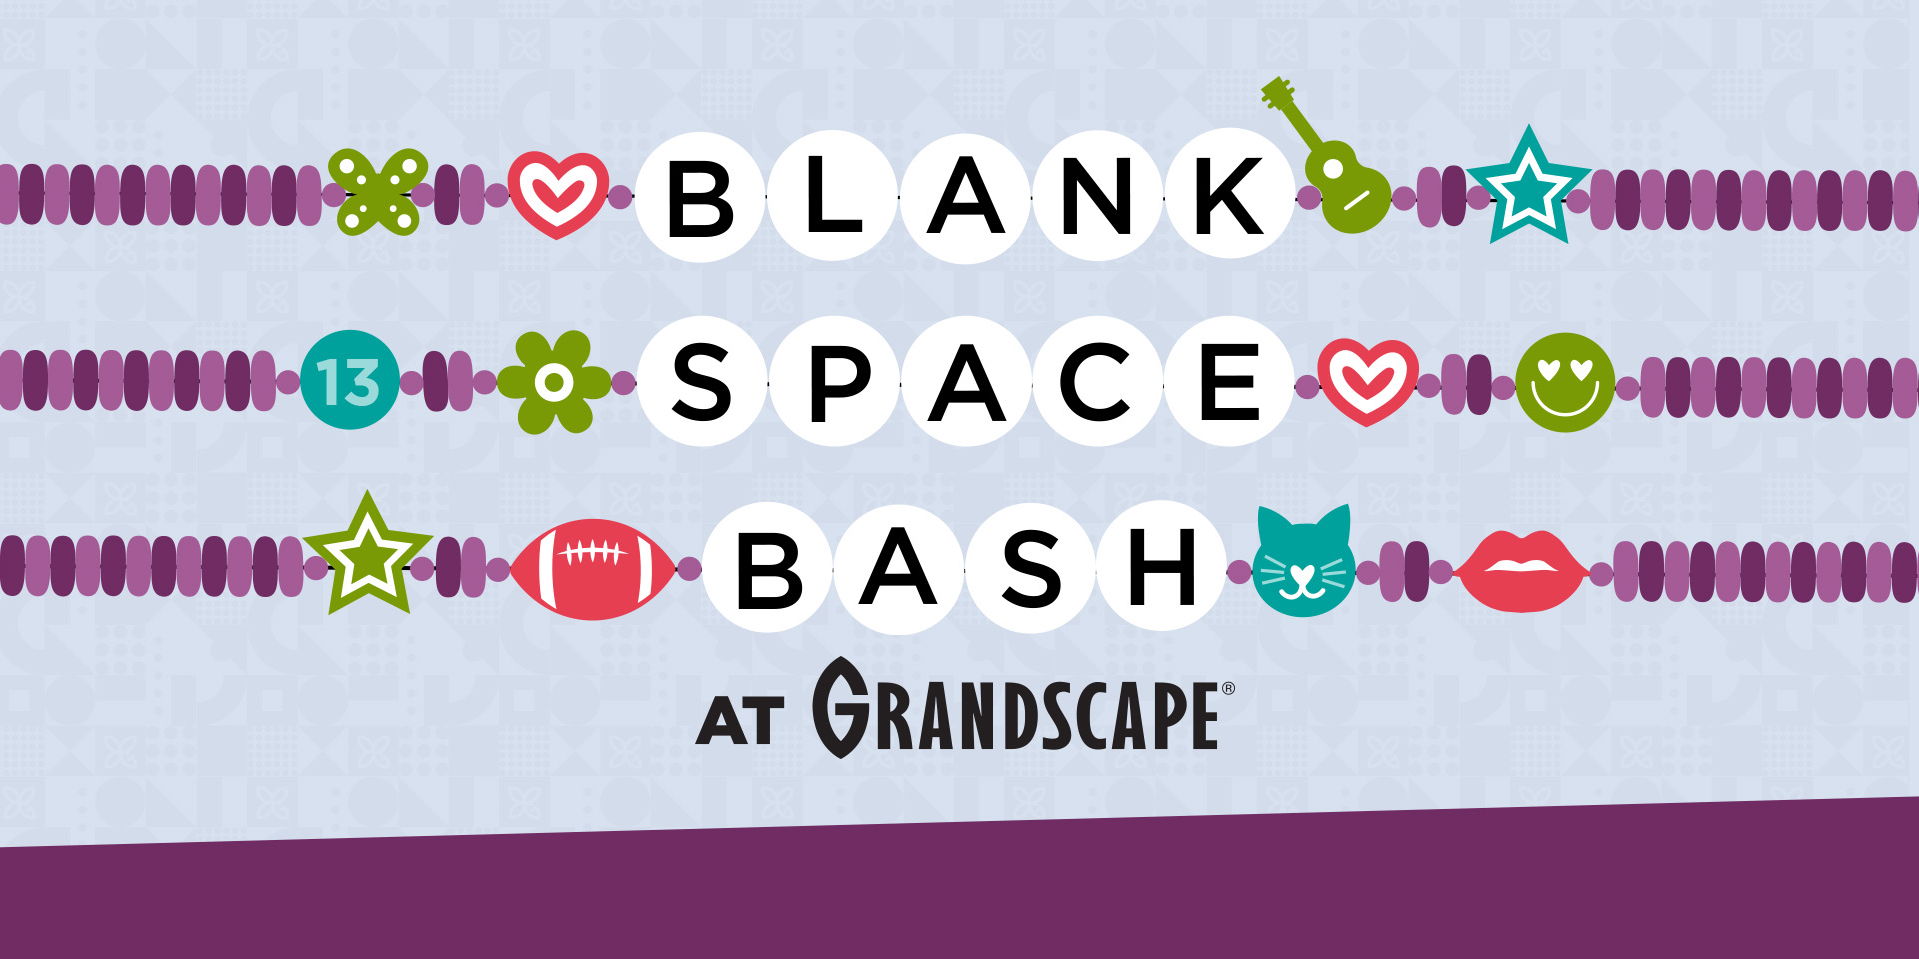 Blank Space Bash promotional image